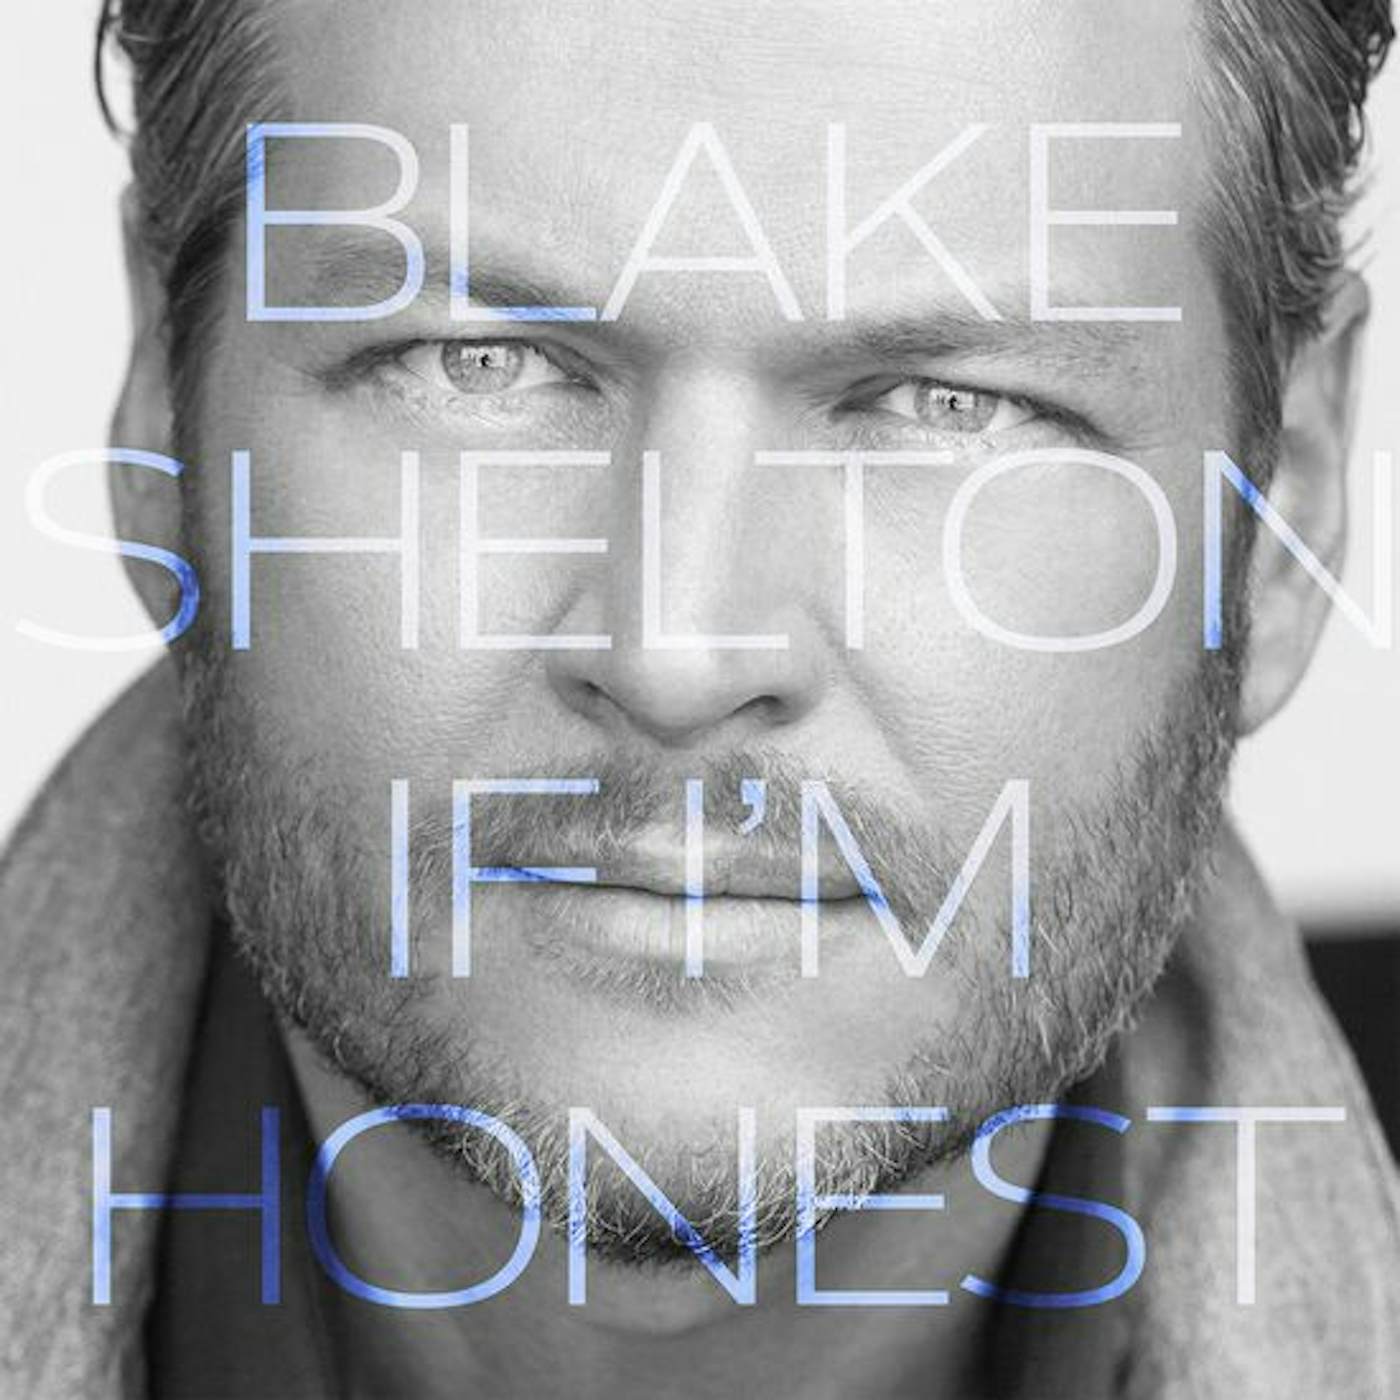 Blake Shelton If I’m Honest CD